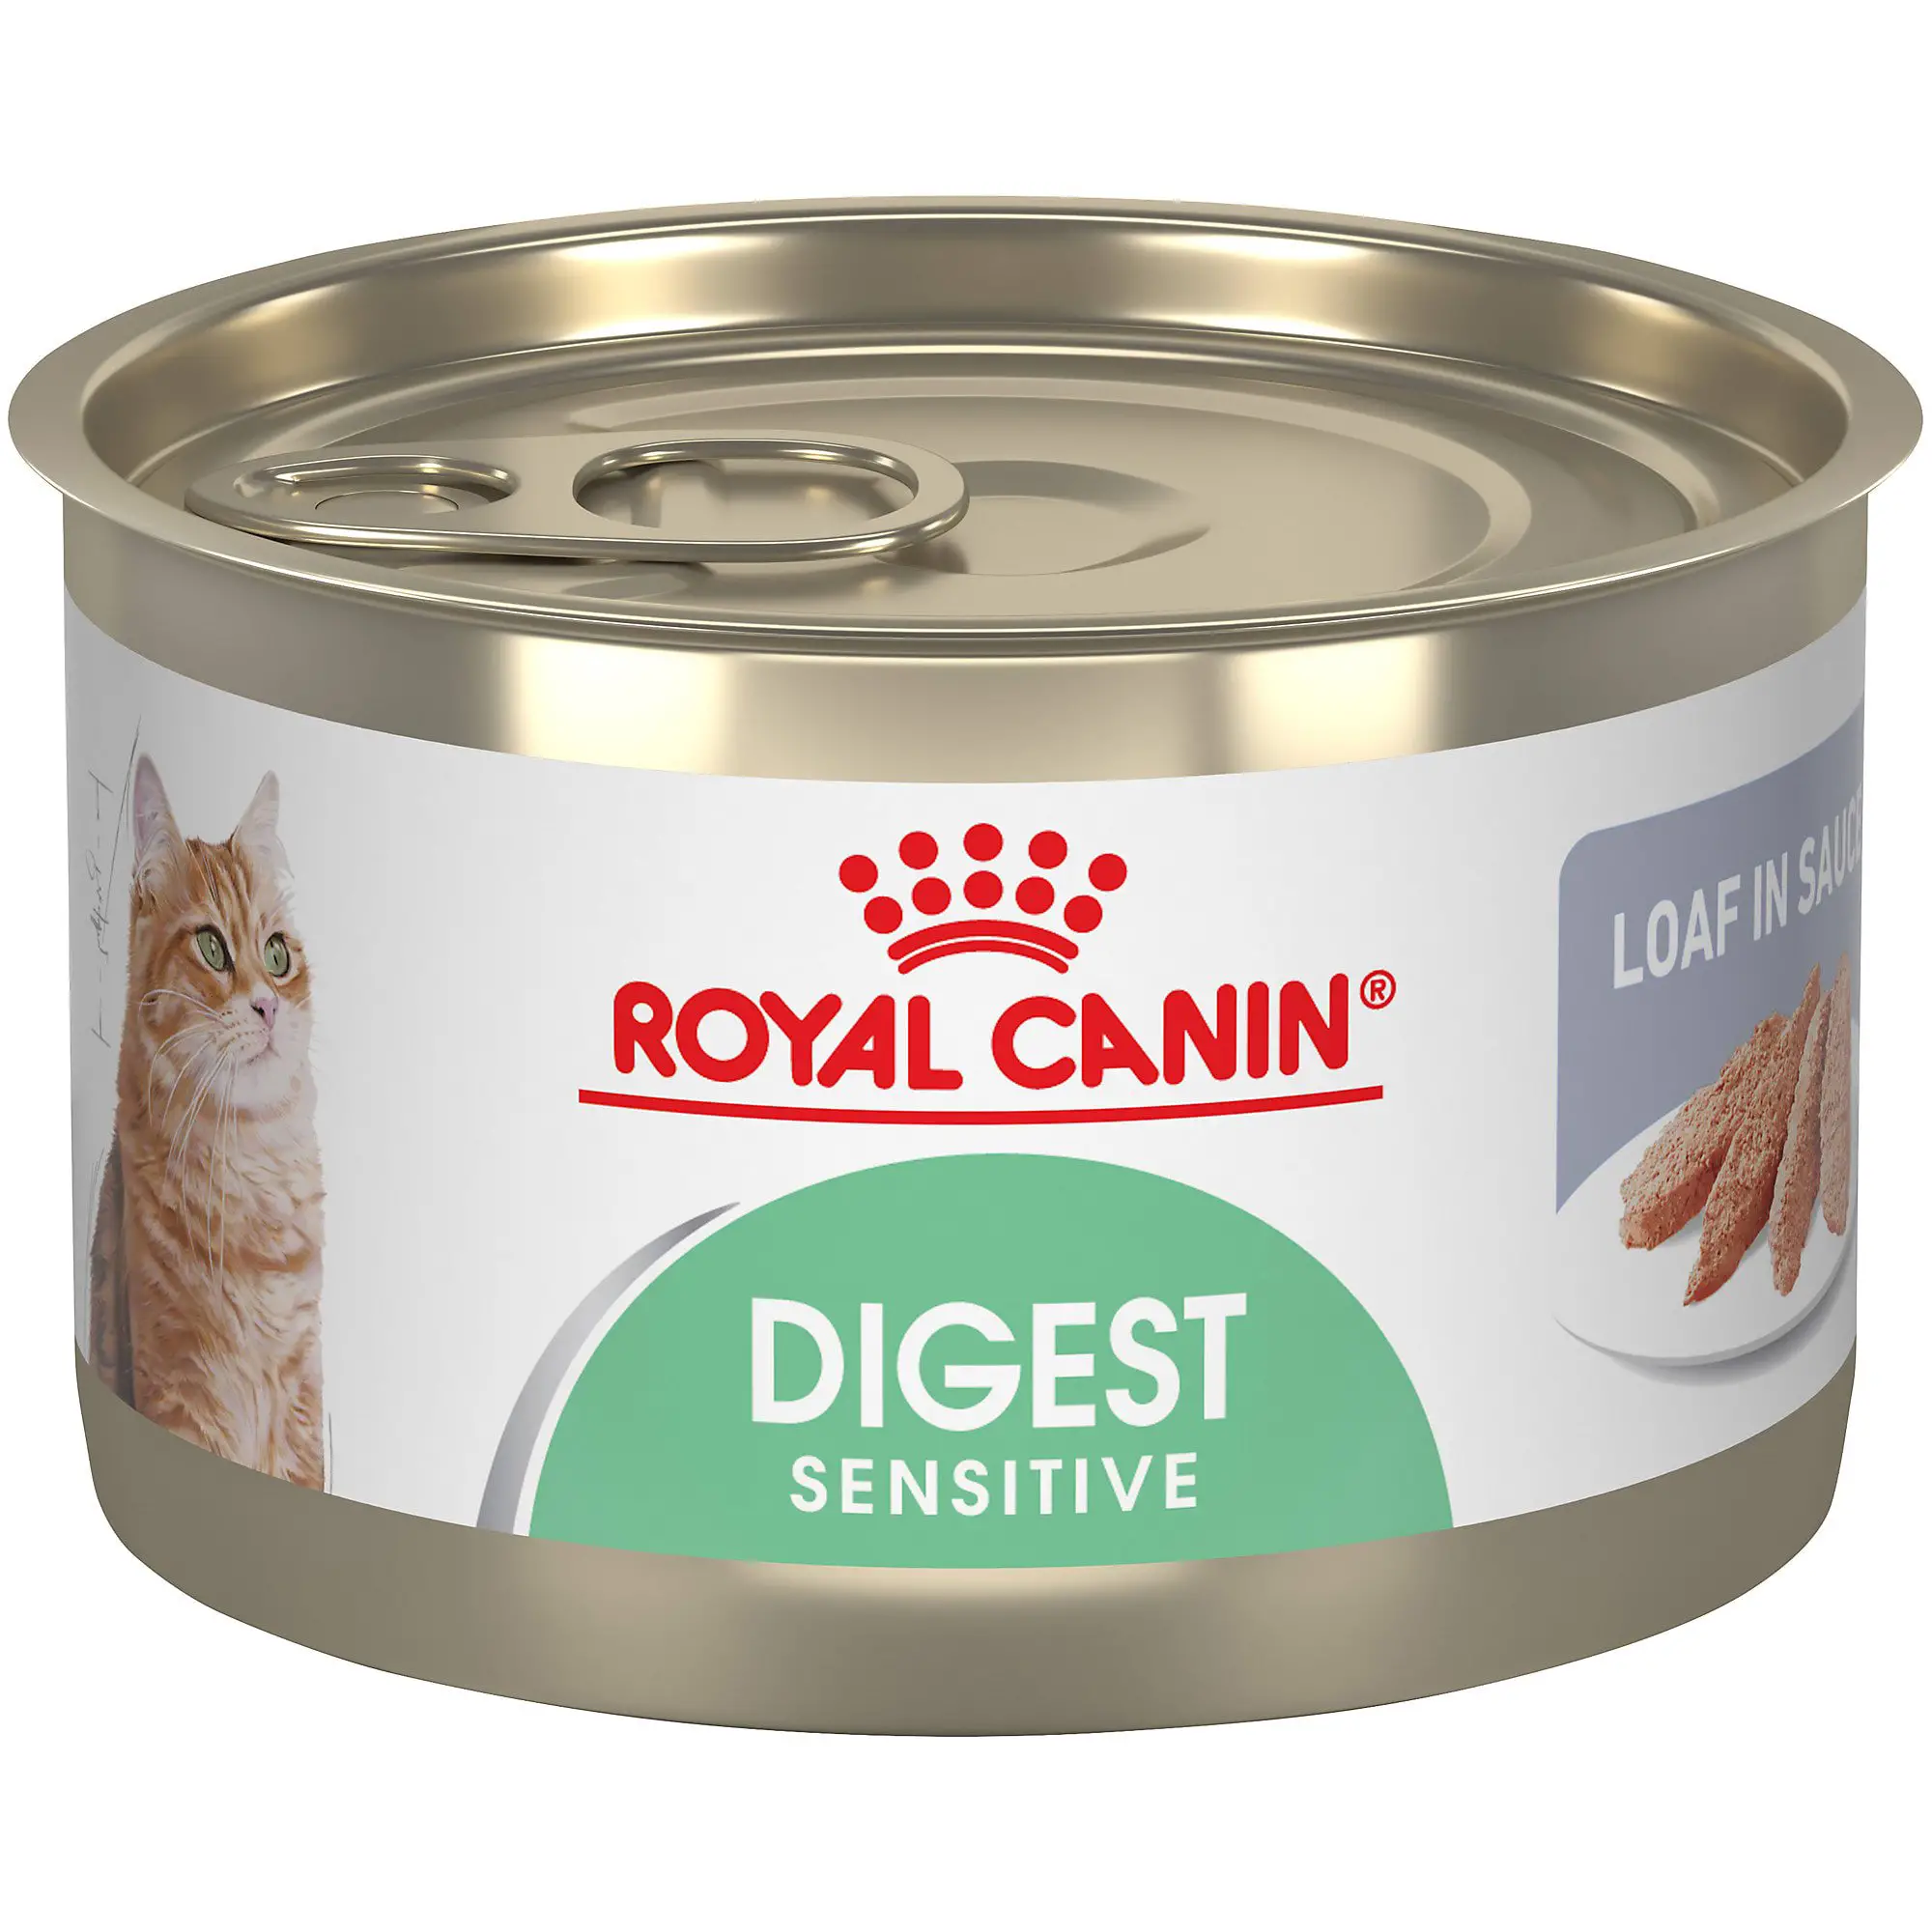 Royal Canin Digest Sensitive Loaf in Sauce Wet Cat Food, 5 ...